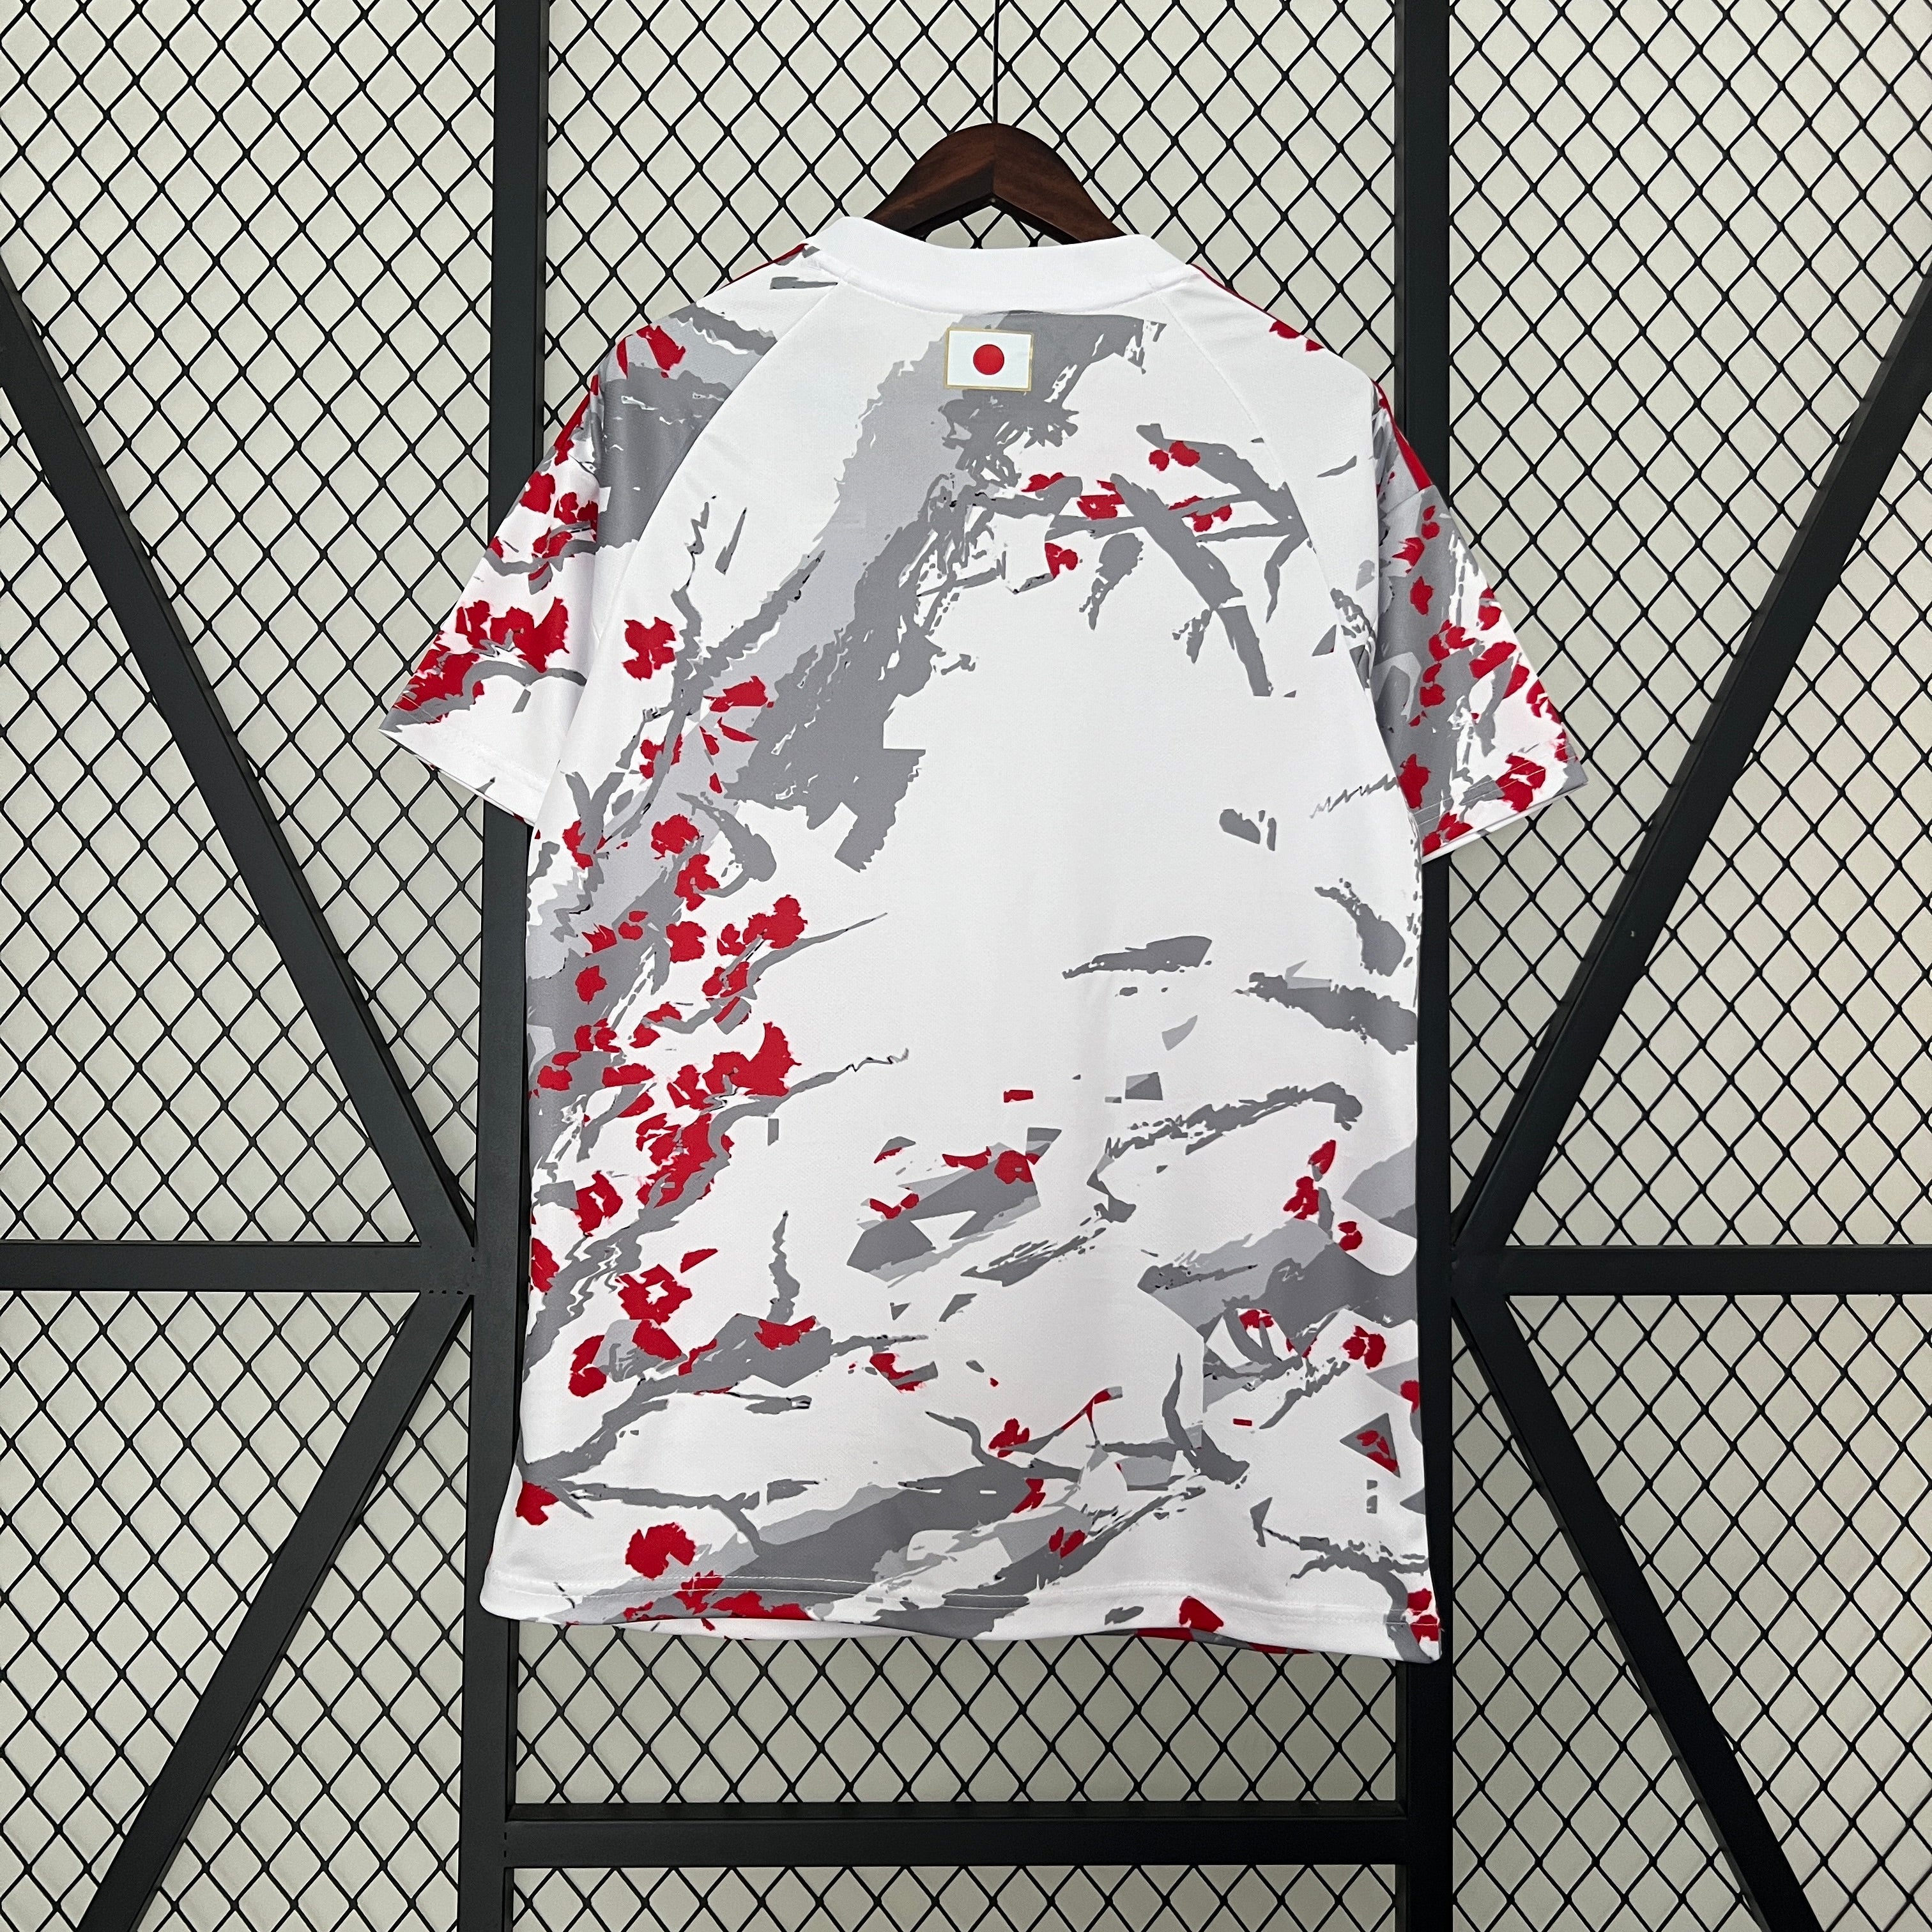 Japan Red N White Exclusive Kit